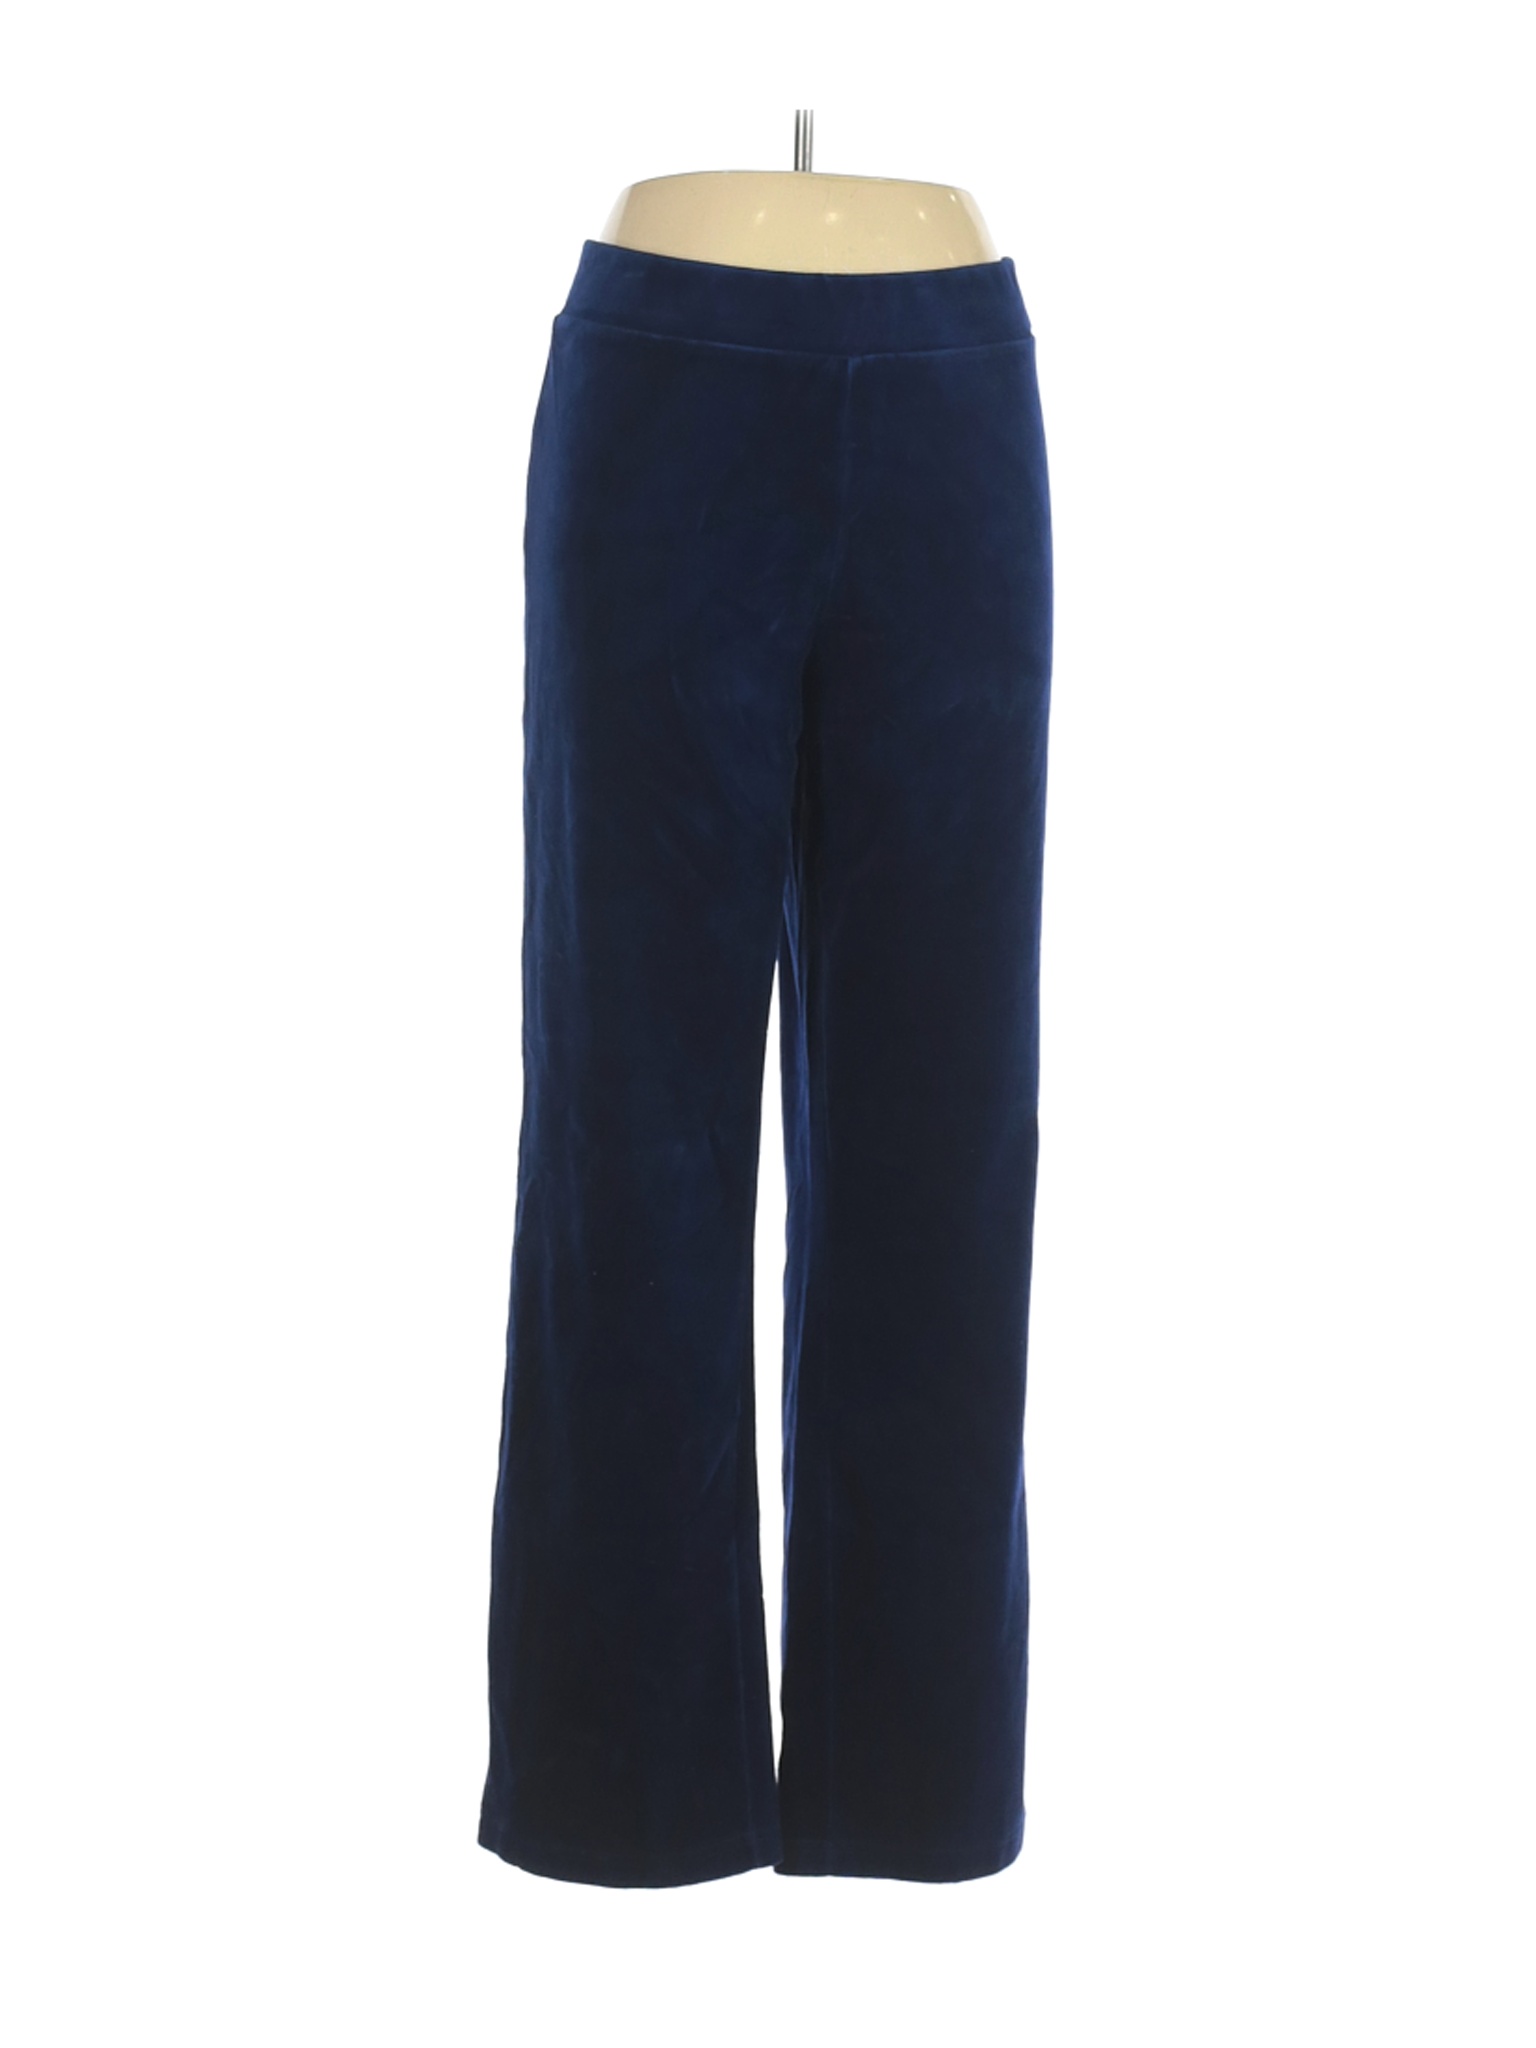 Lauren by Ralph Lauren Women Blue Velour Pants XL | eBay